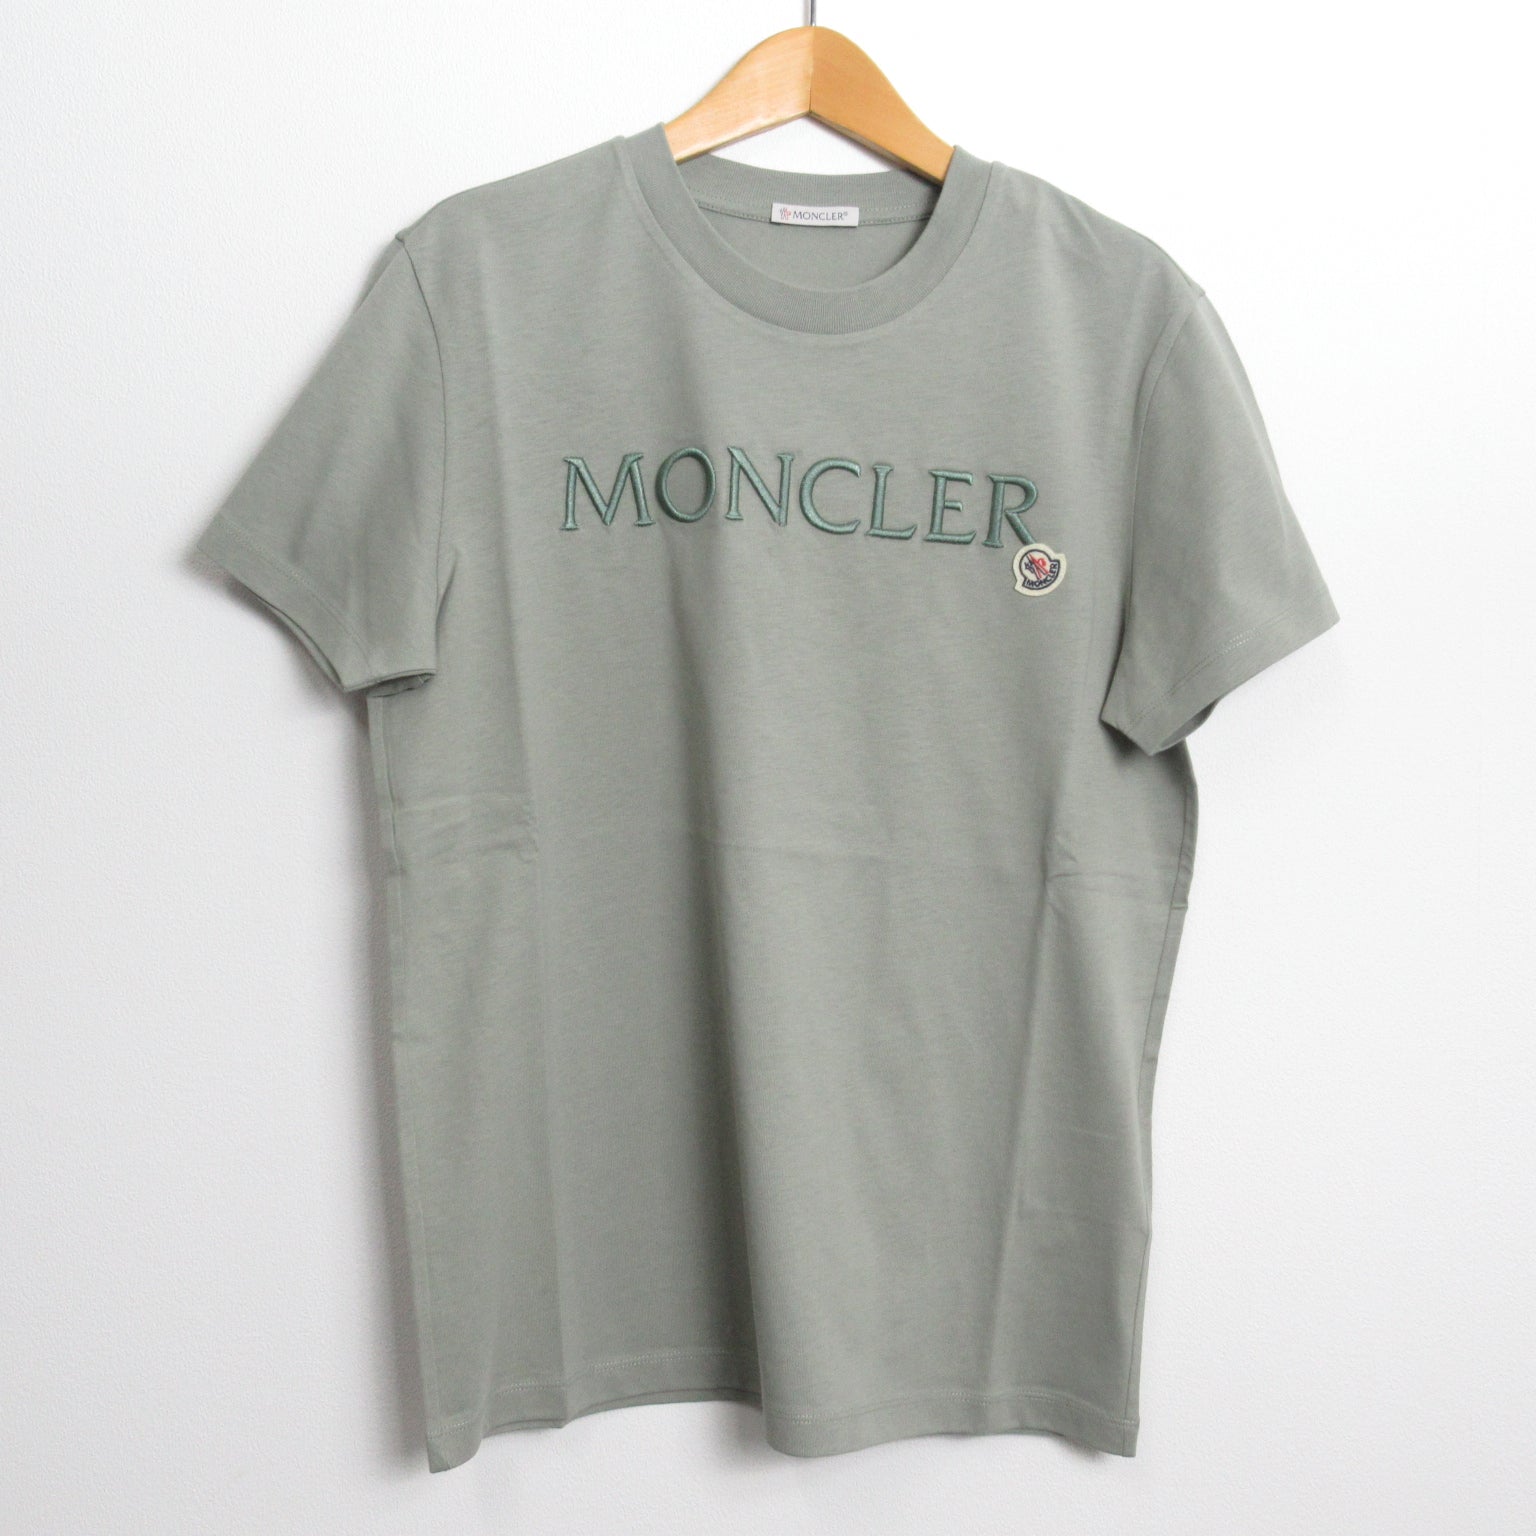 Moncler MONCLER  Half-Hand   Tops Cotton   Green 8C00006829HP92GM